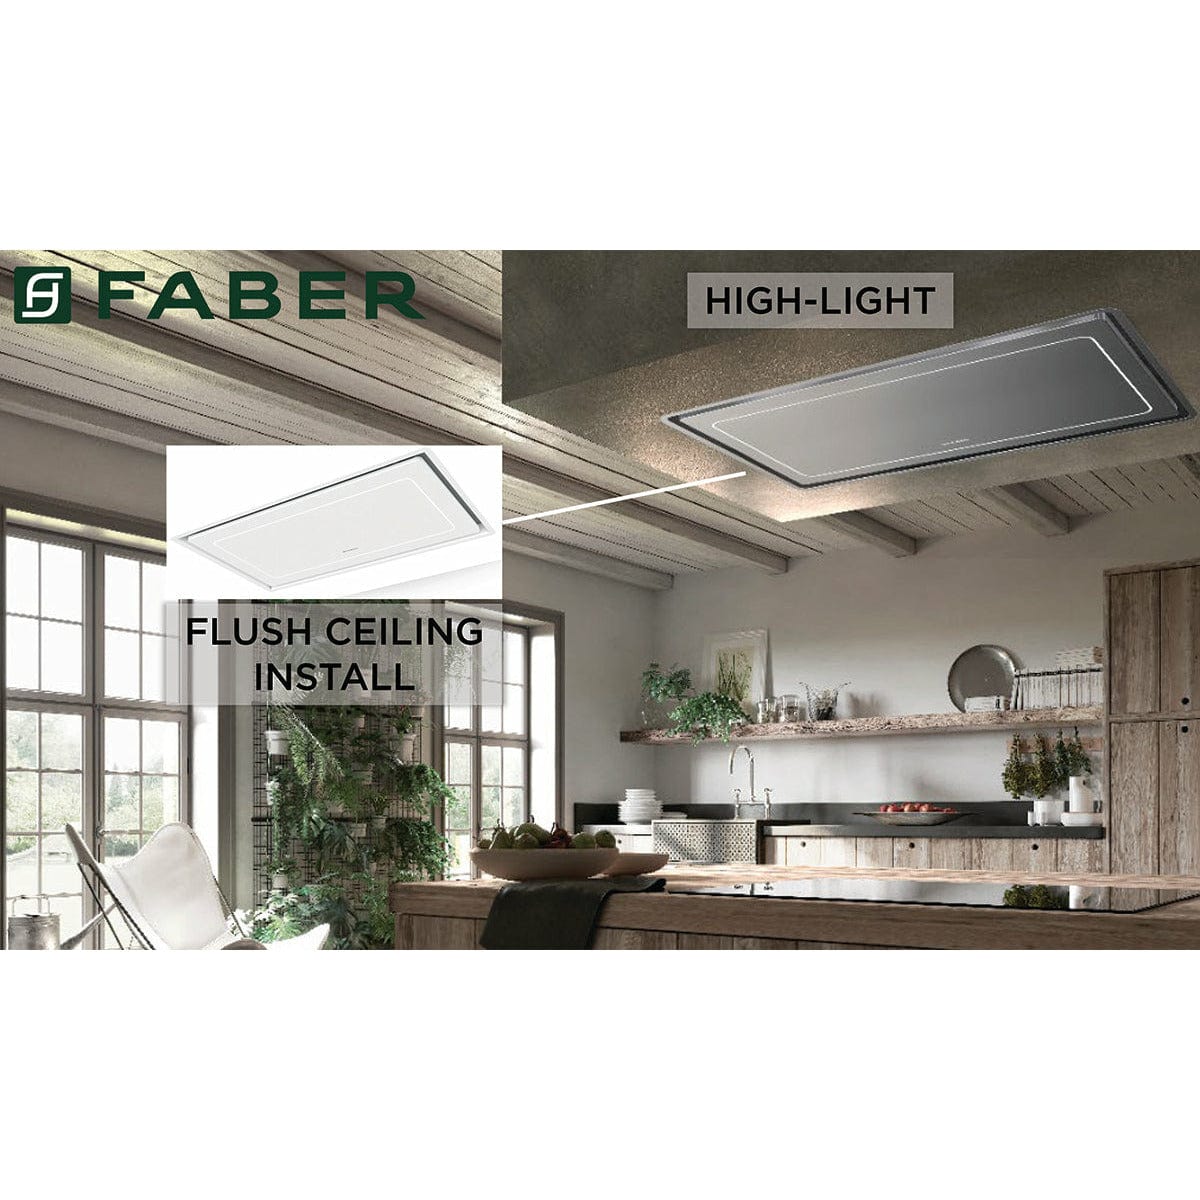 FABER High-Light Stainless Steel Hood - HILTIS36SSNB Hoods HILTIS36SSNB Luxury Appliances Direct